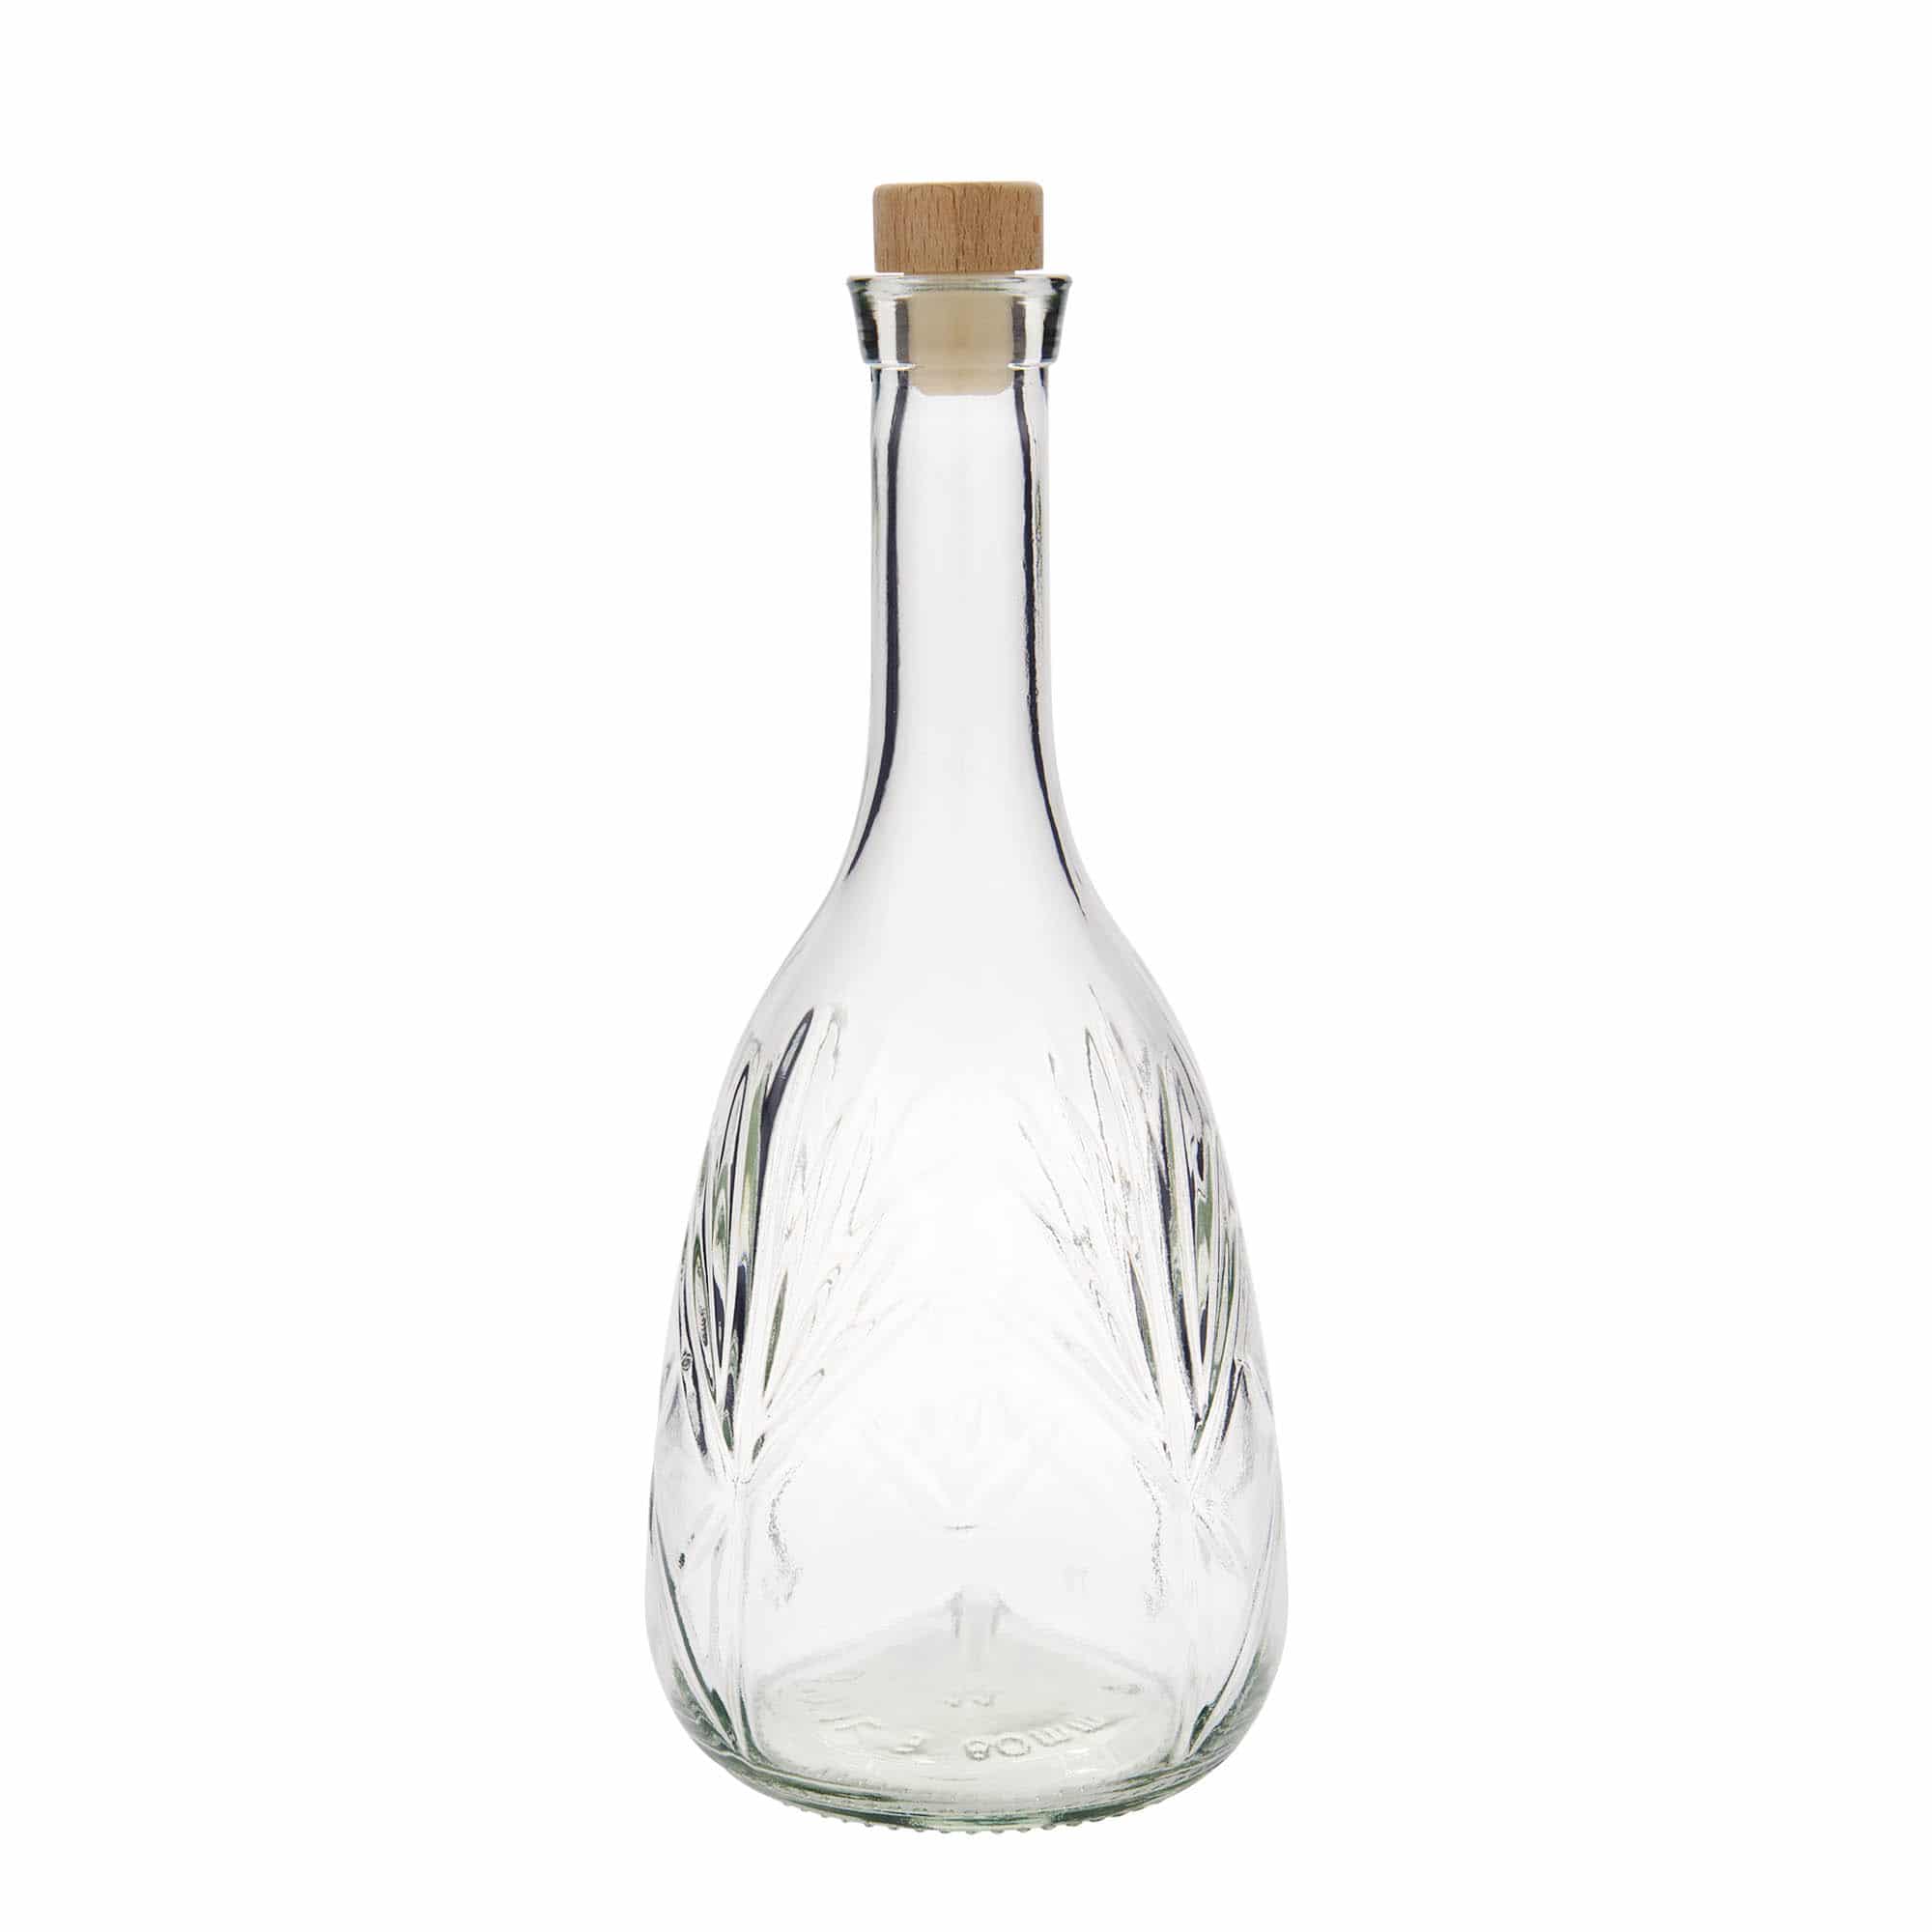 https://www.botellas-y-tarros.es/media/2e/2d/5f/1701935249/10002606-1000-ml-glass-bottle-reliefa-closure-cork-2.jpg